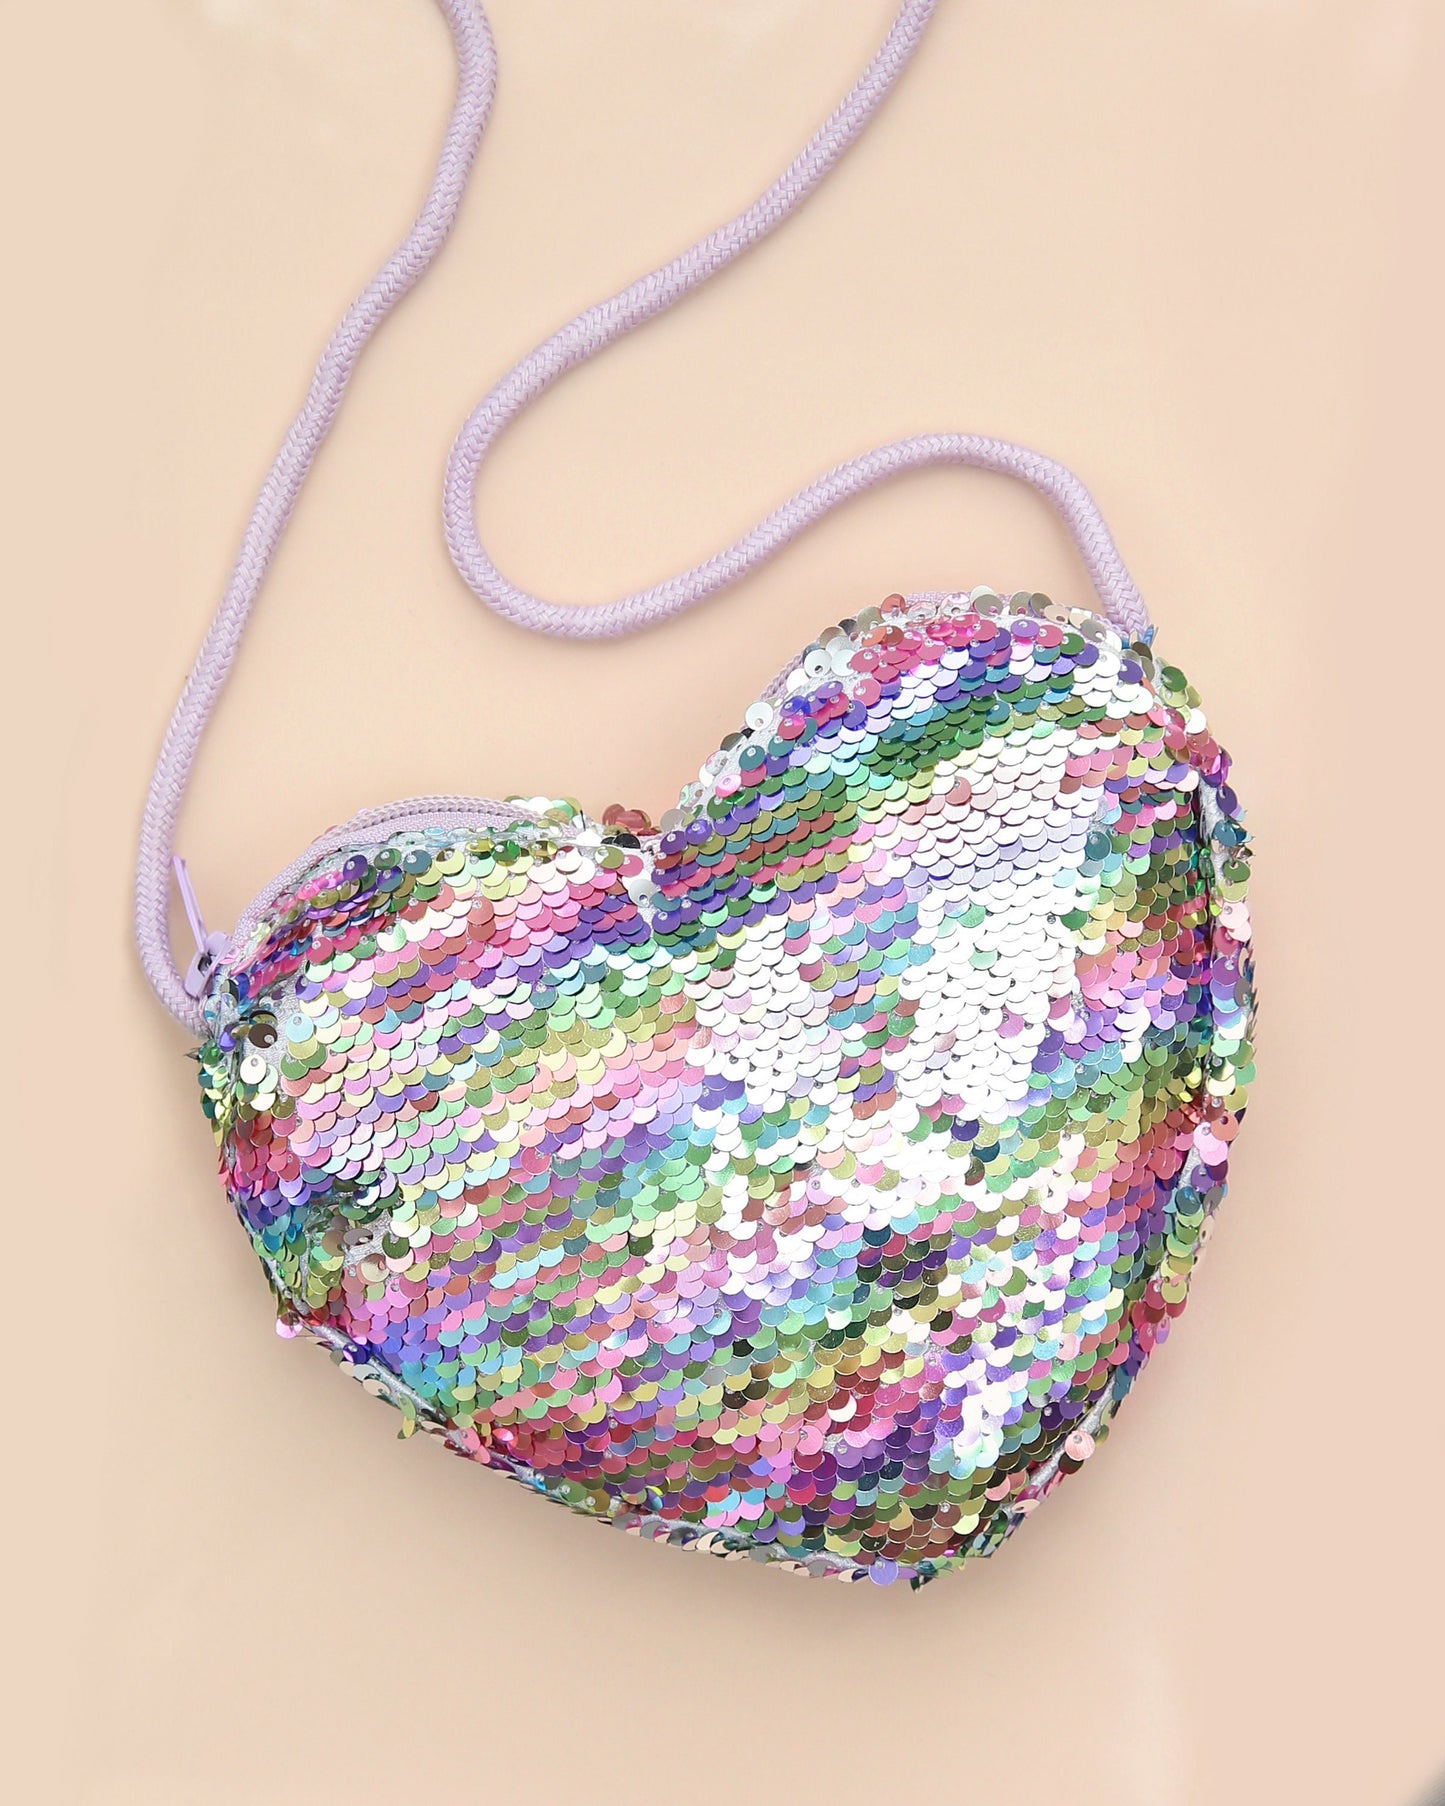 Heart Sequin Purse - Flip Sequin Heart Bag - Girls Heart Purse - Pastel Rainbow and Silver Holographic Flip Heart Bag